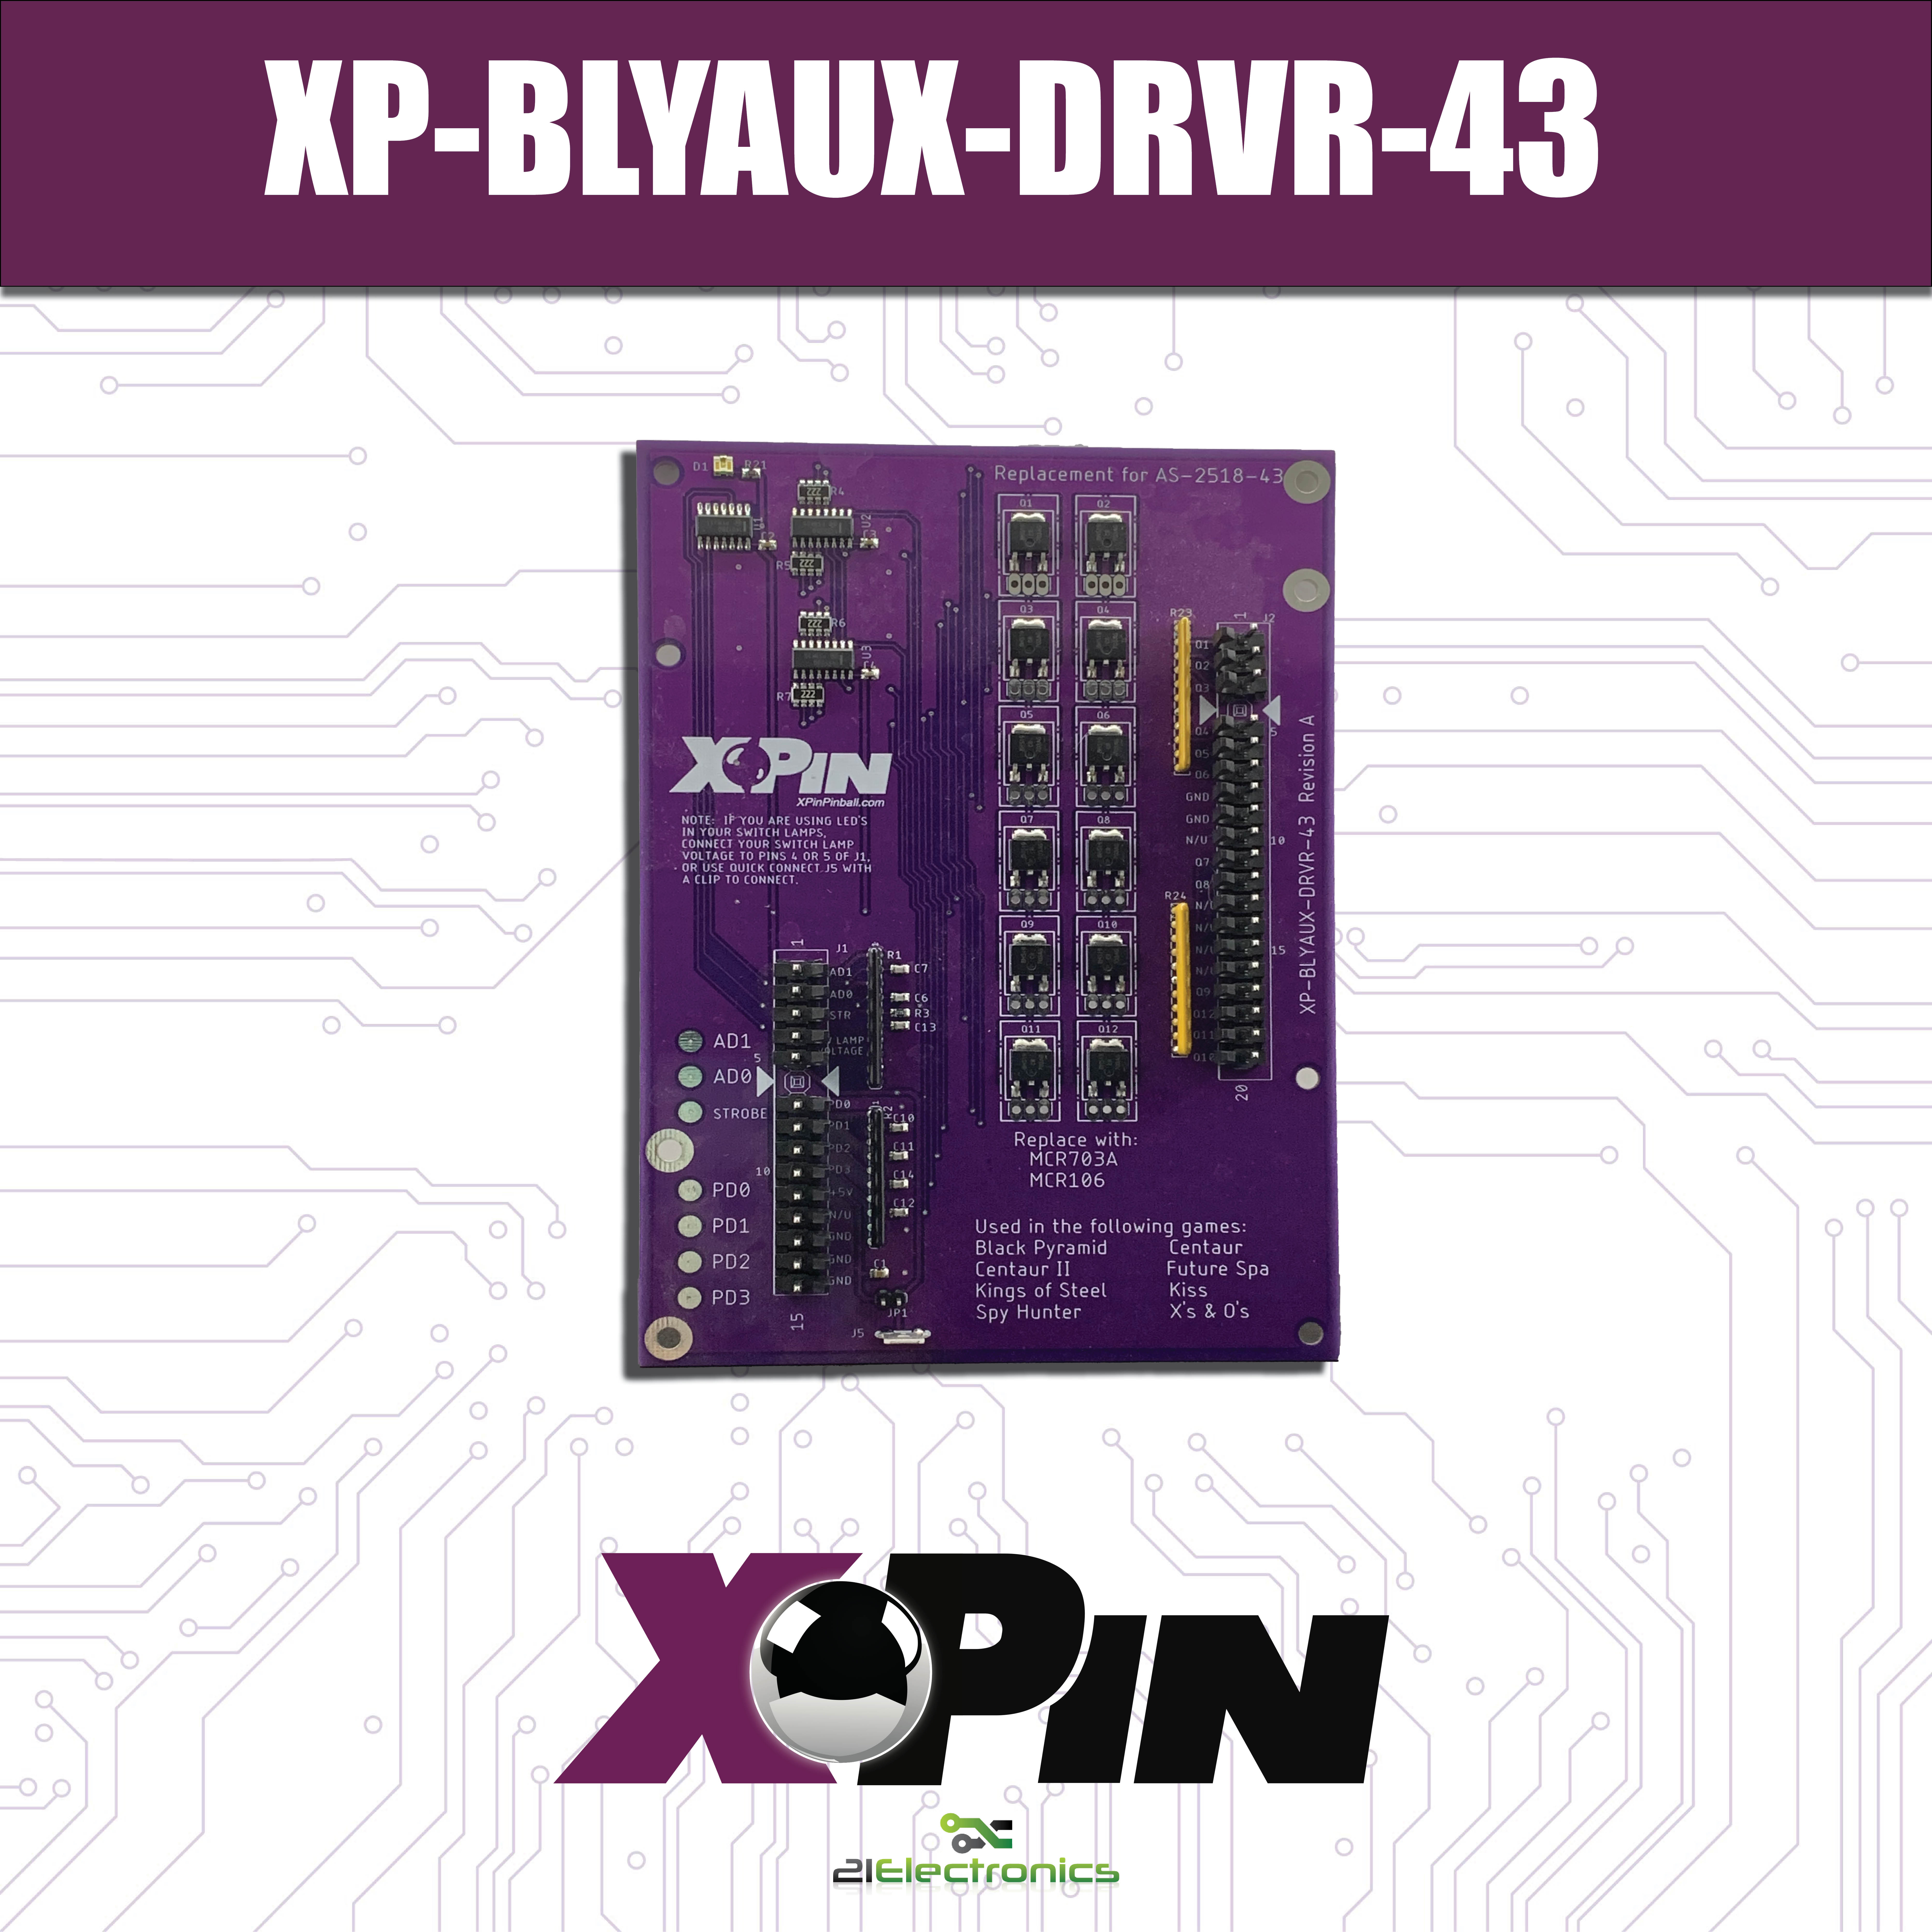 XP-BLYAUX-DRVR-43